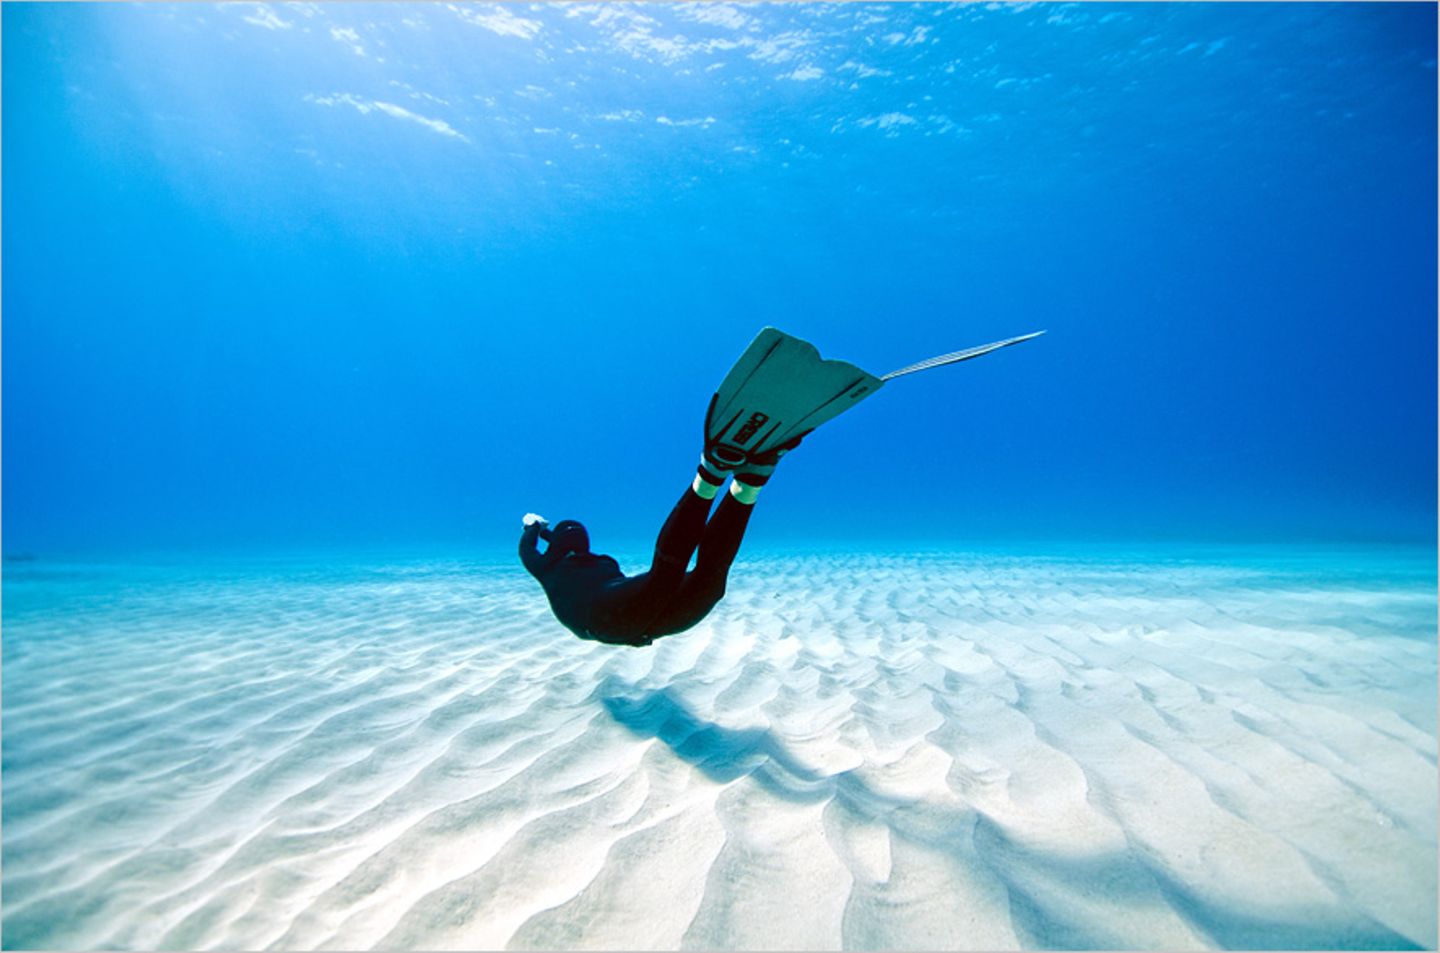 Apnoe-Tauchen: "Freediven fördert die mentale Stärke" - Bild 5